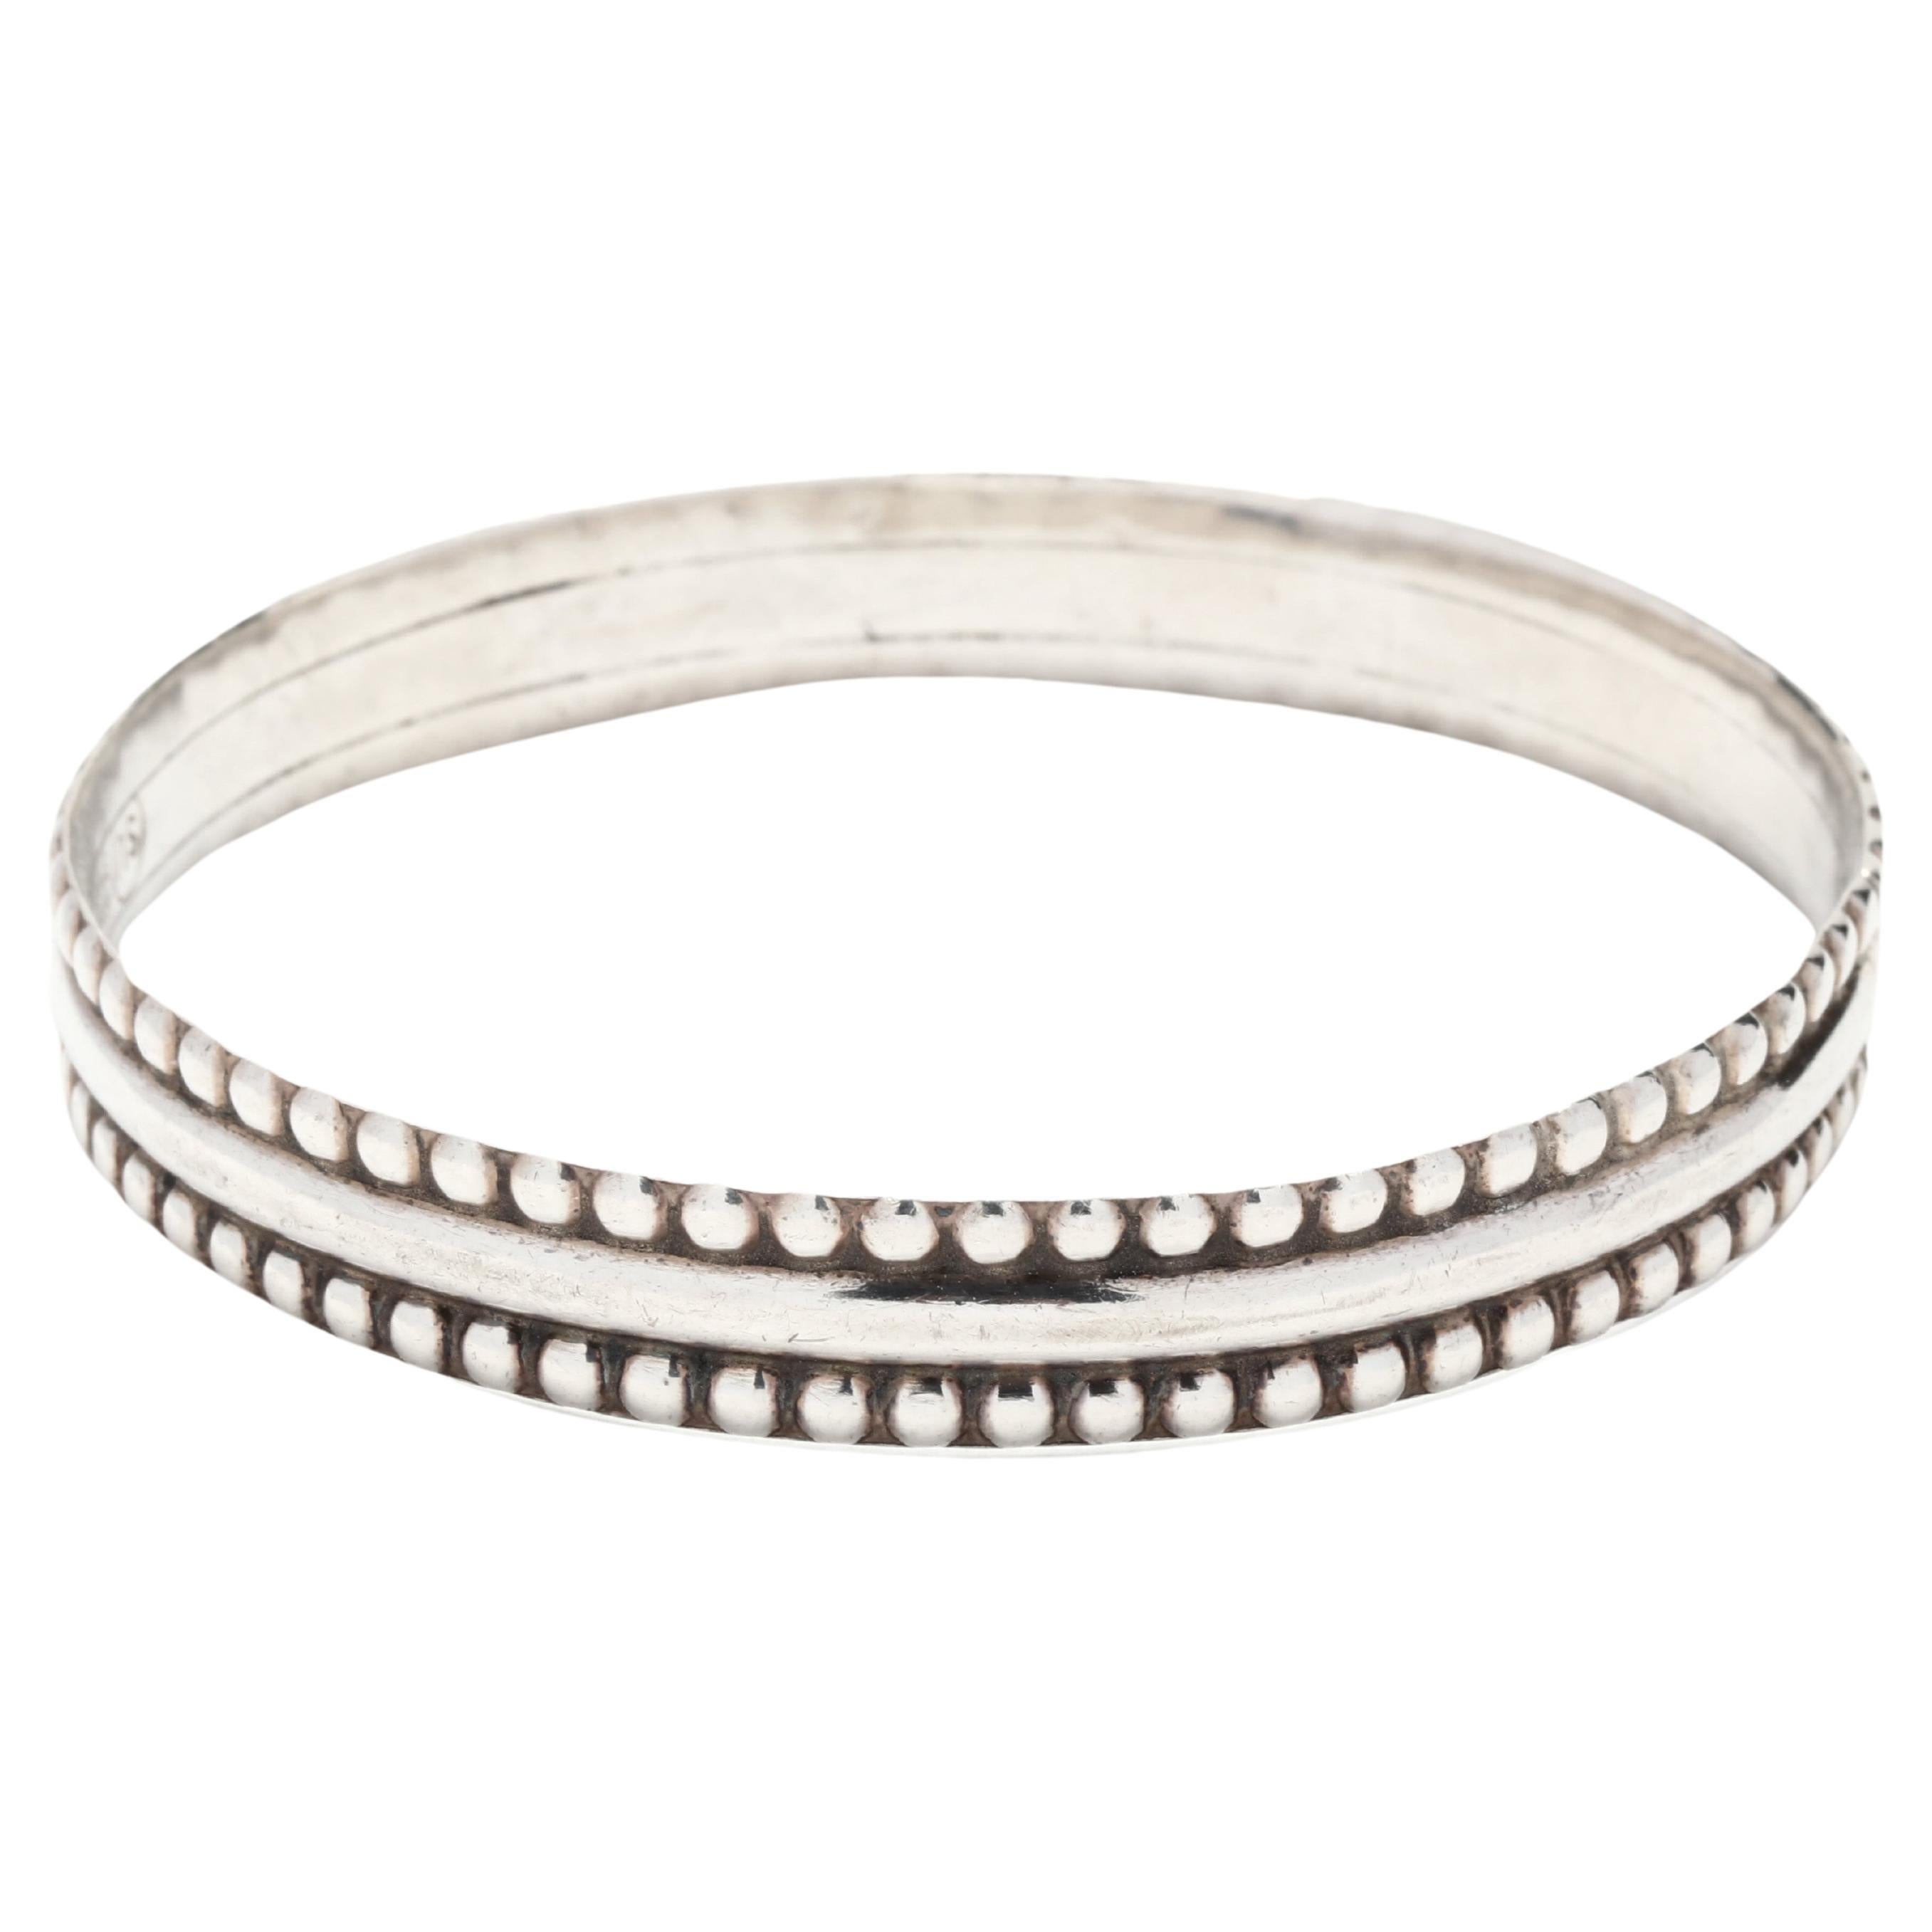  Beaded Eternity Bangle Bracelet, Sterling Silver, Length 8 Inch